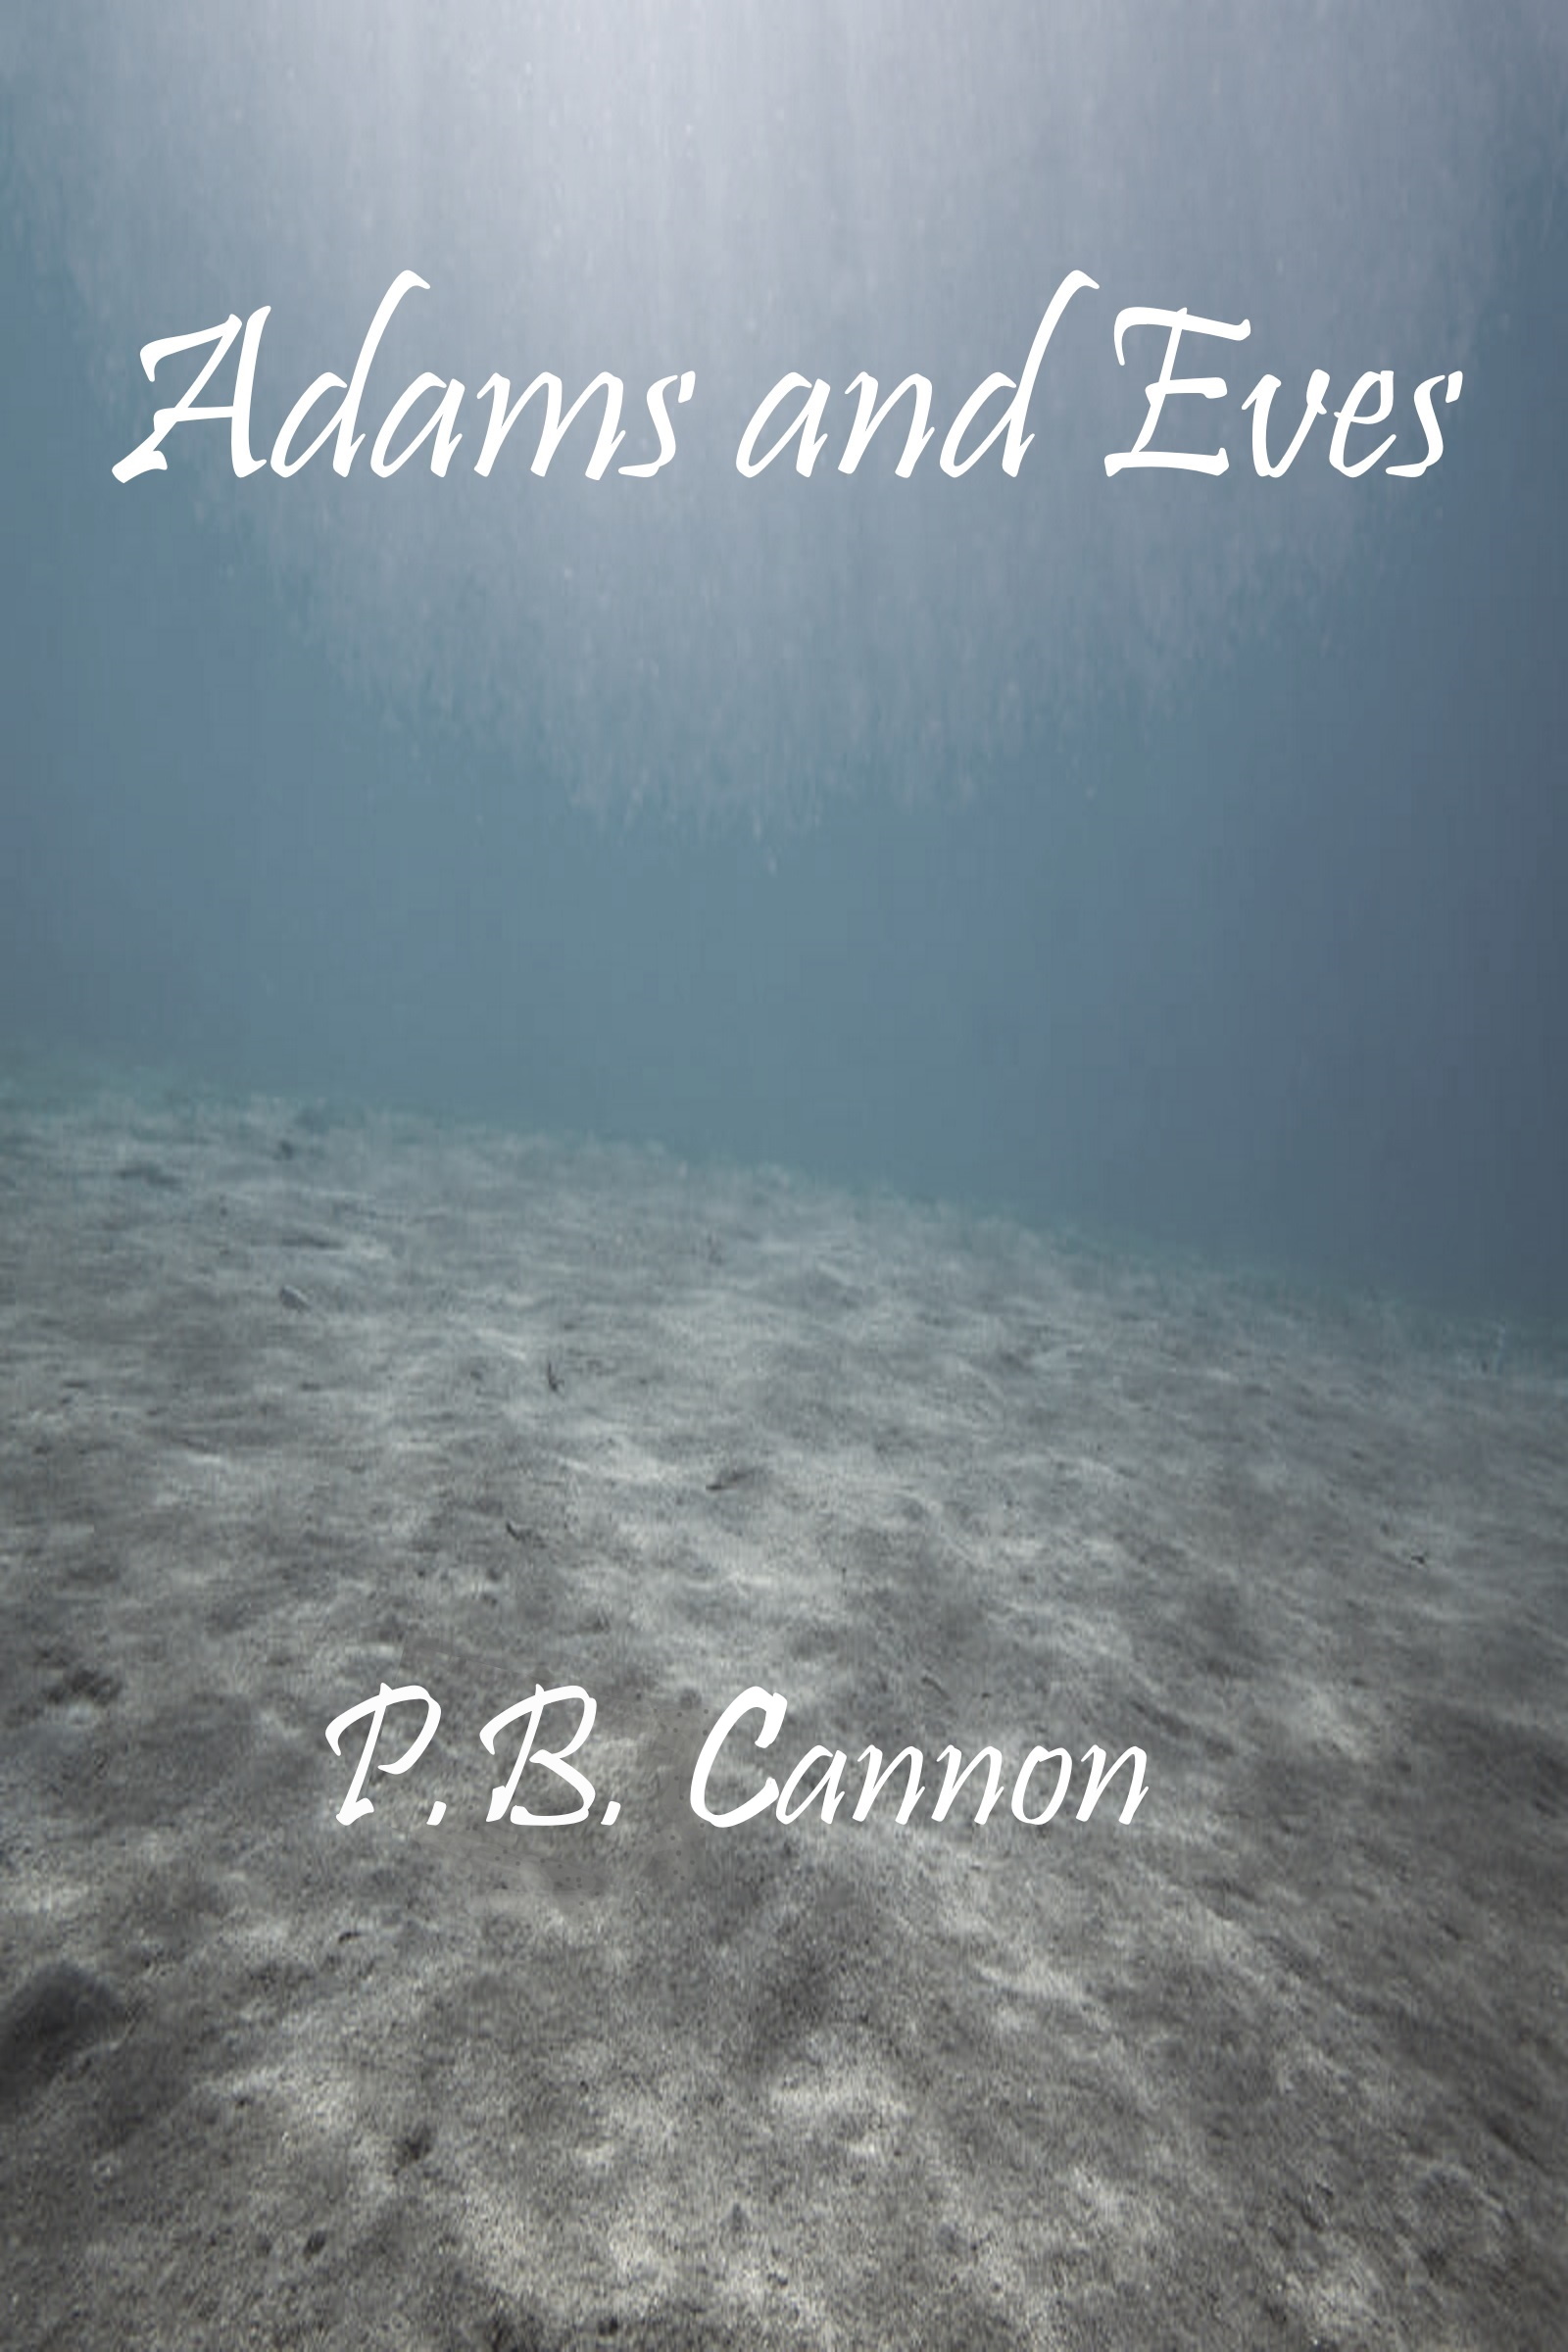 Adams and Evesnew alternate author name